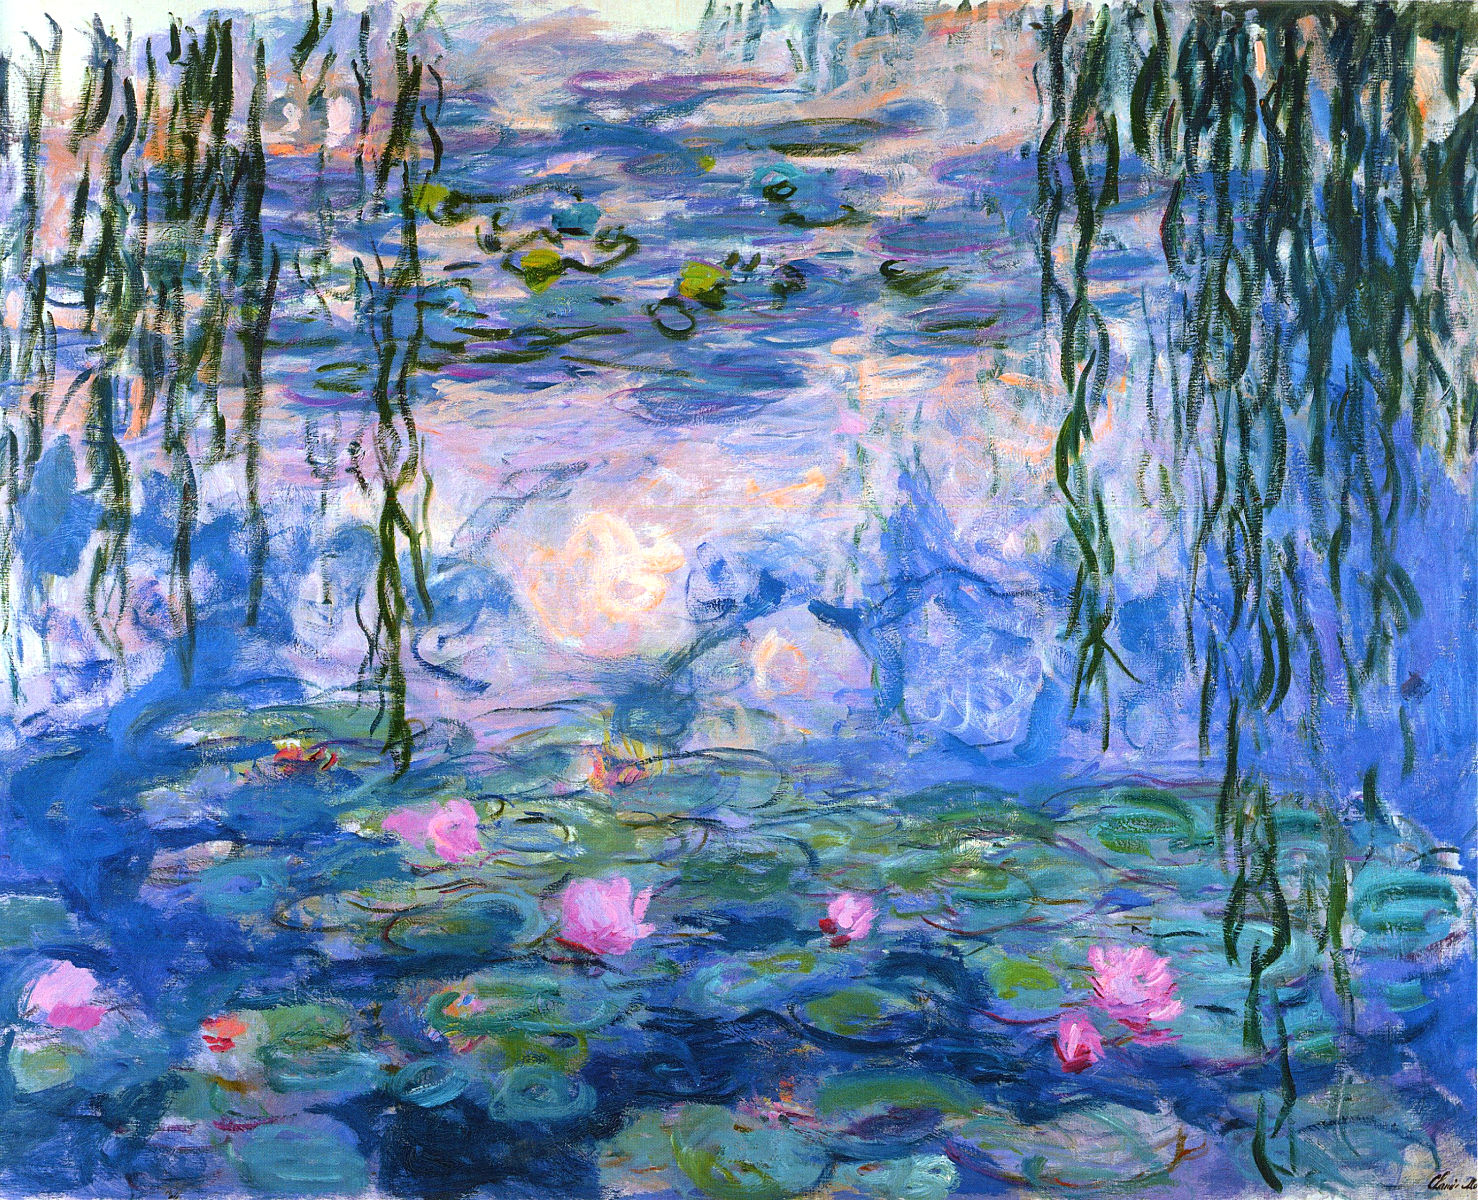 Claude+Monet-1840-1926 (963).jpg